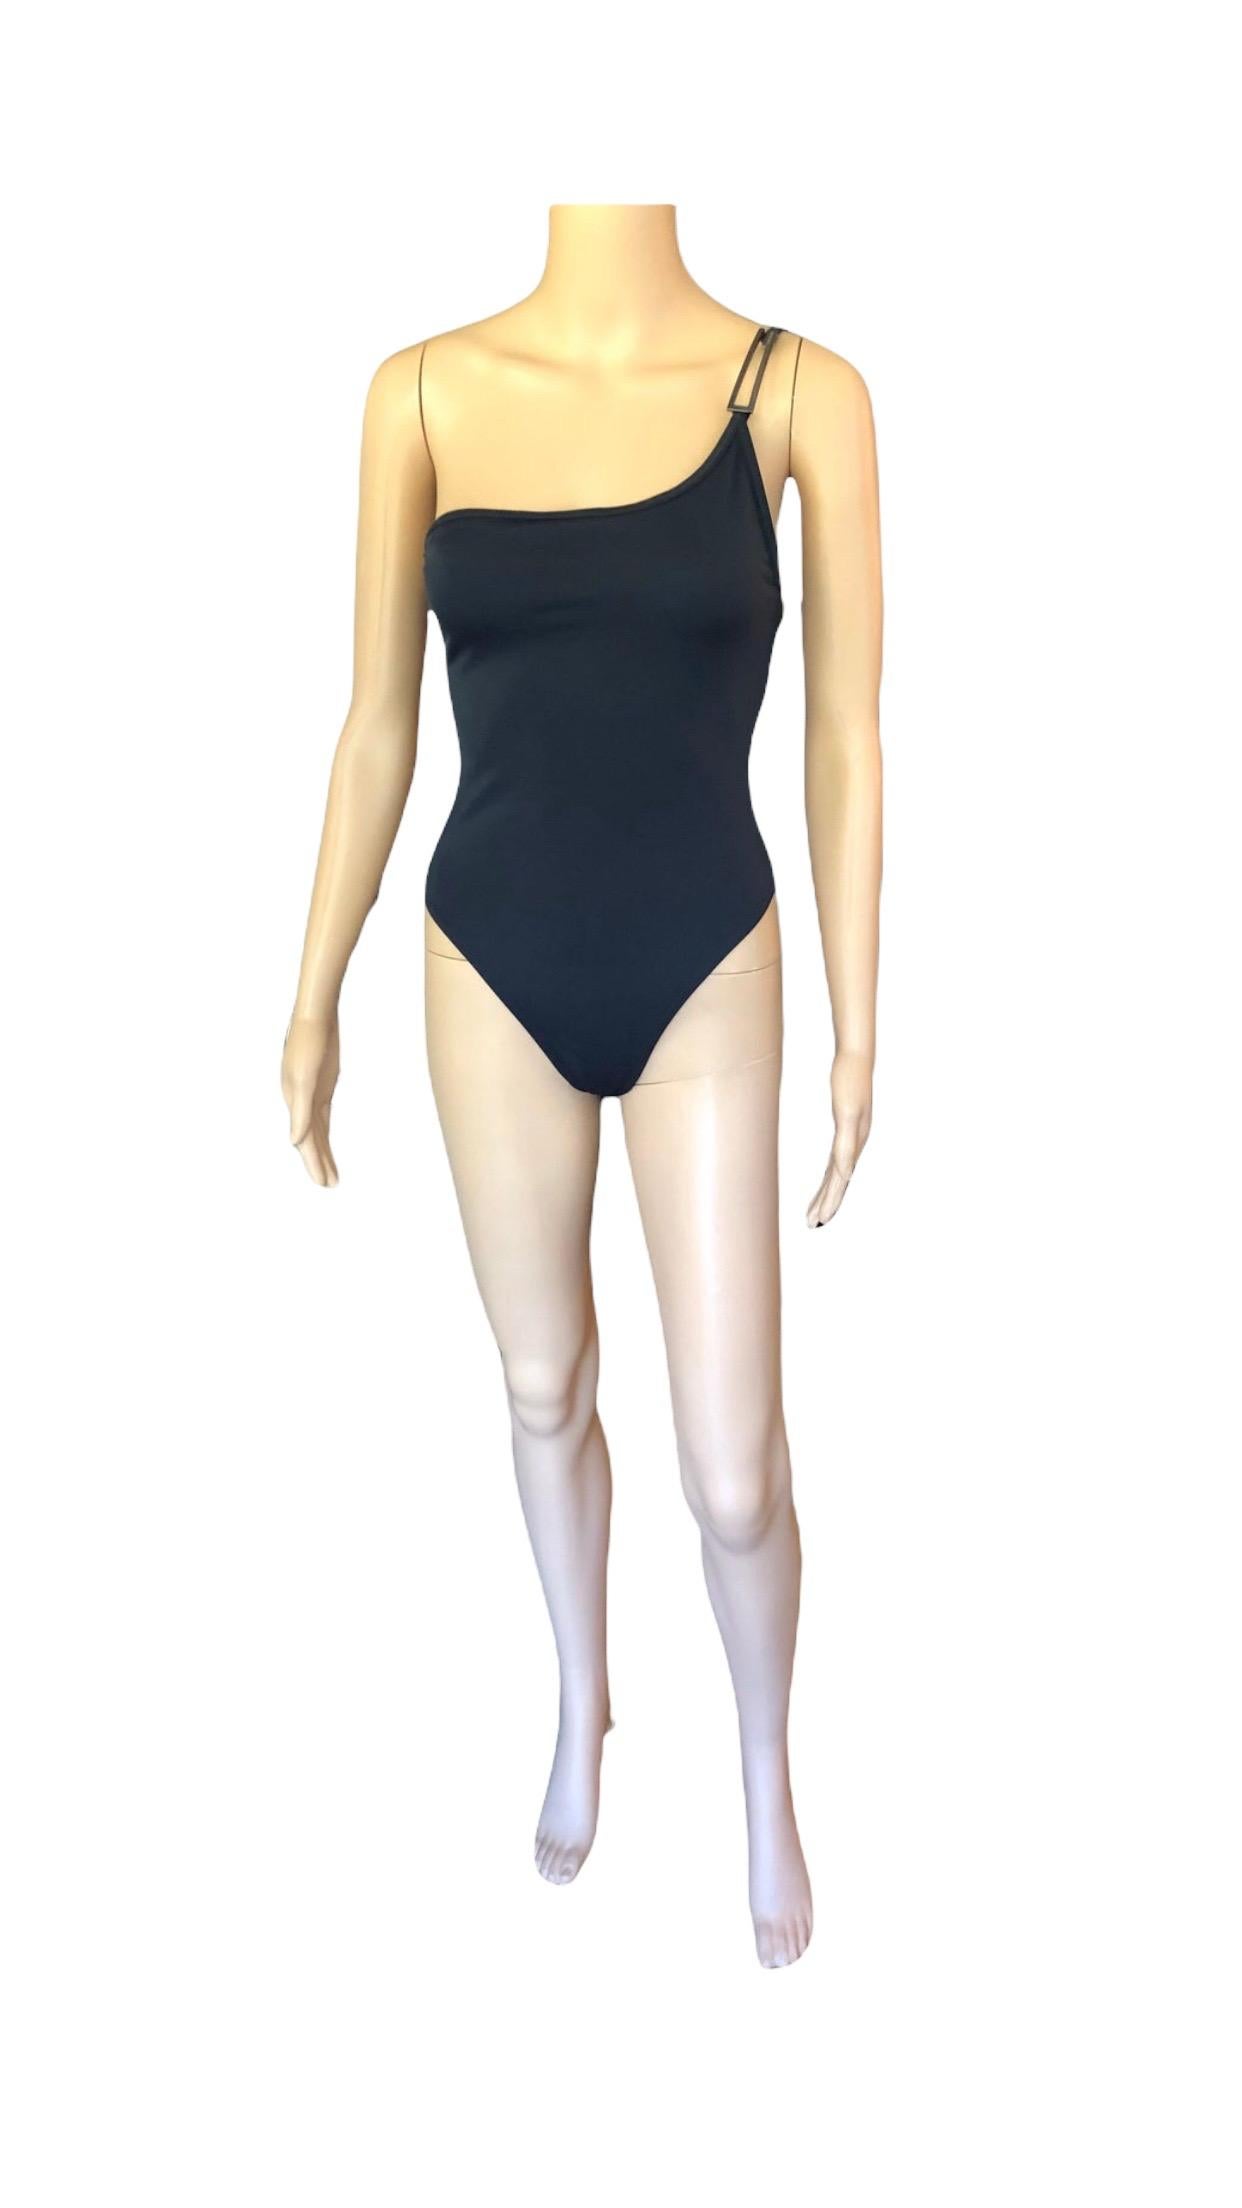 Tom Ford for Gucci S/S 1998 Runway G Logo One Shoulder Black Bodysuit Swimsuit  5